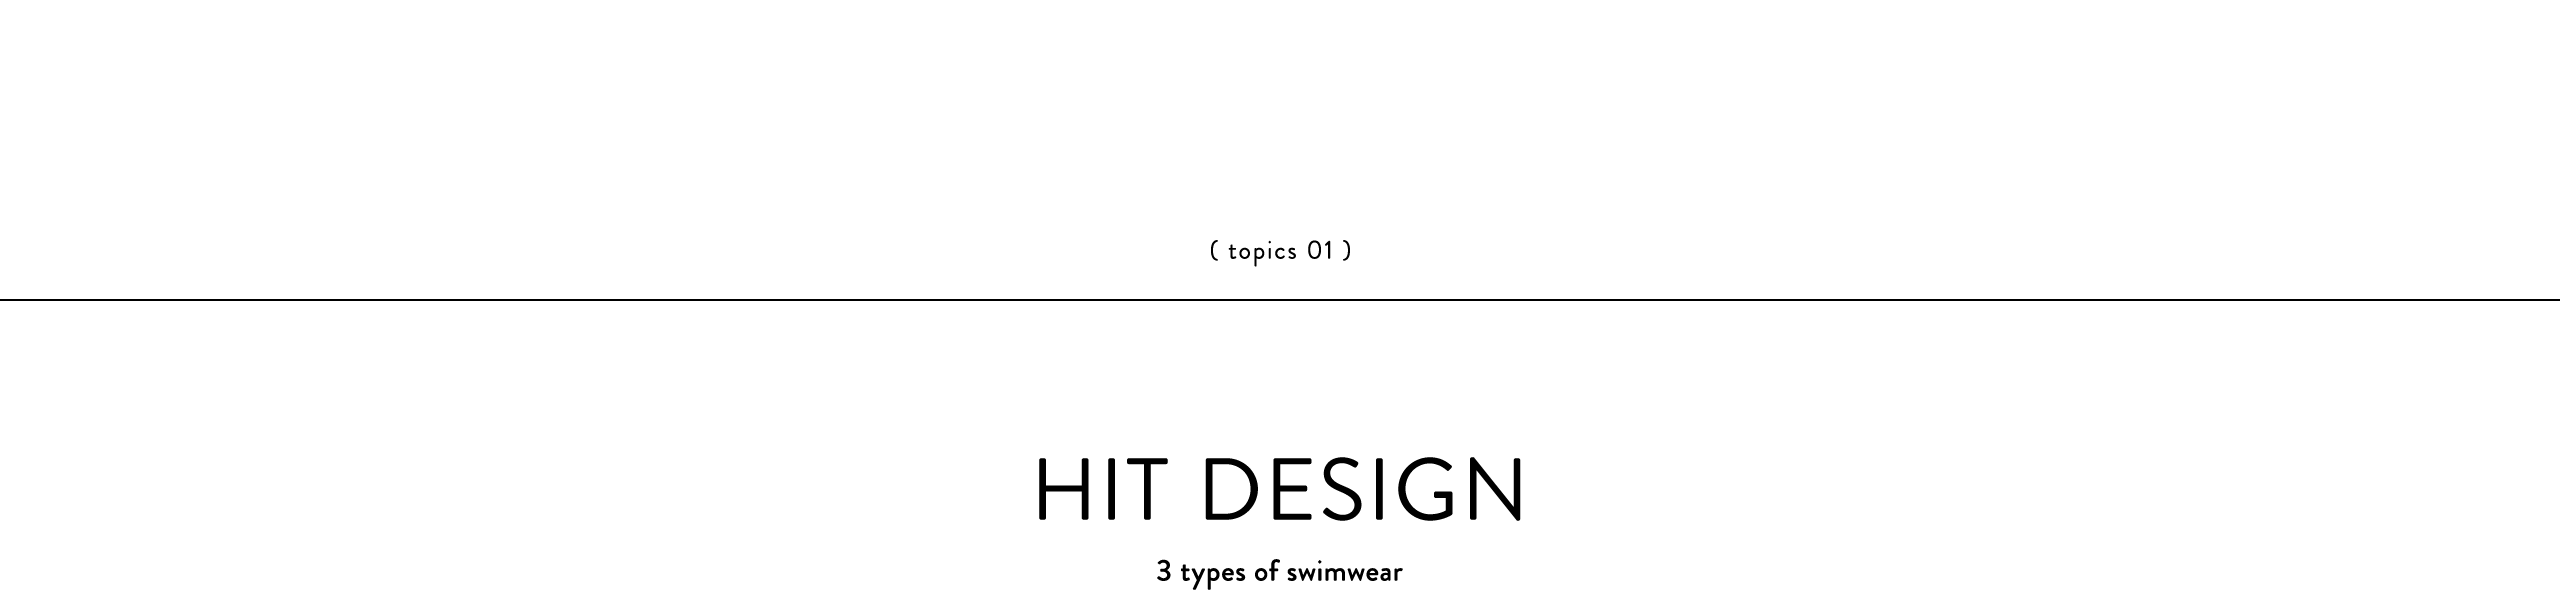 topics 01 HIT DESIGN